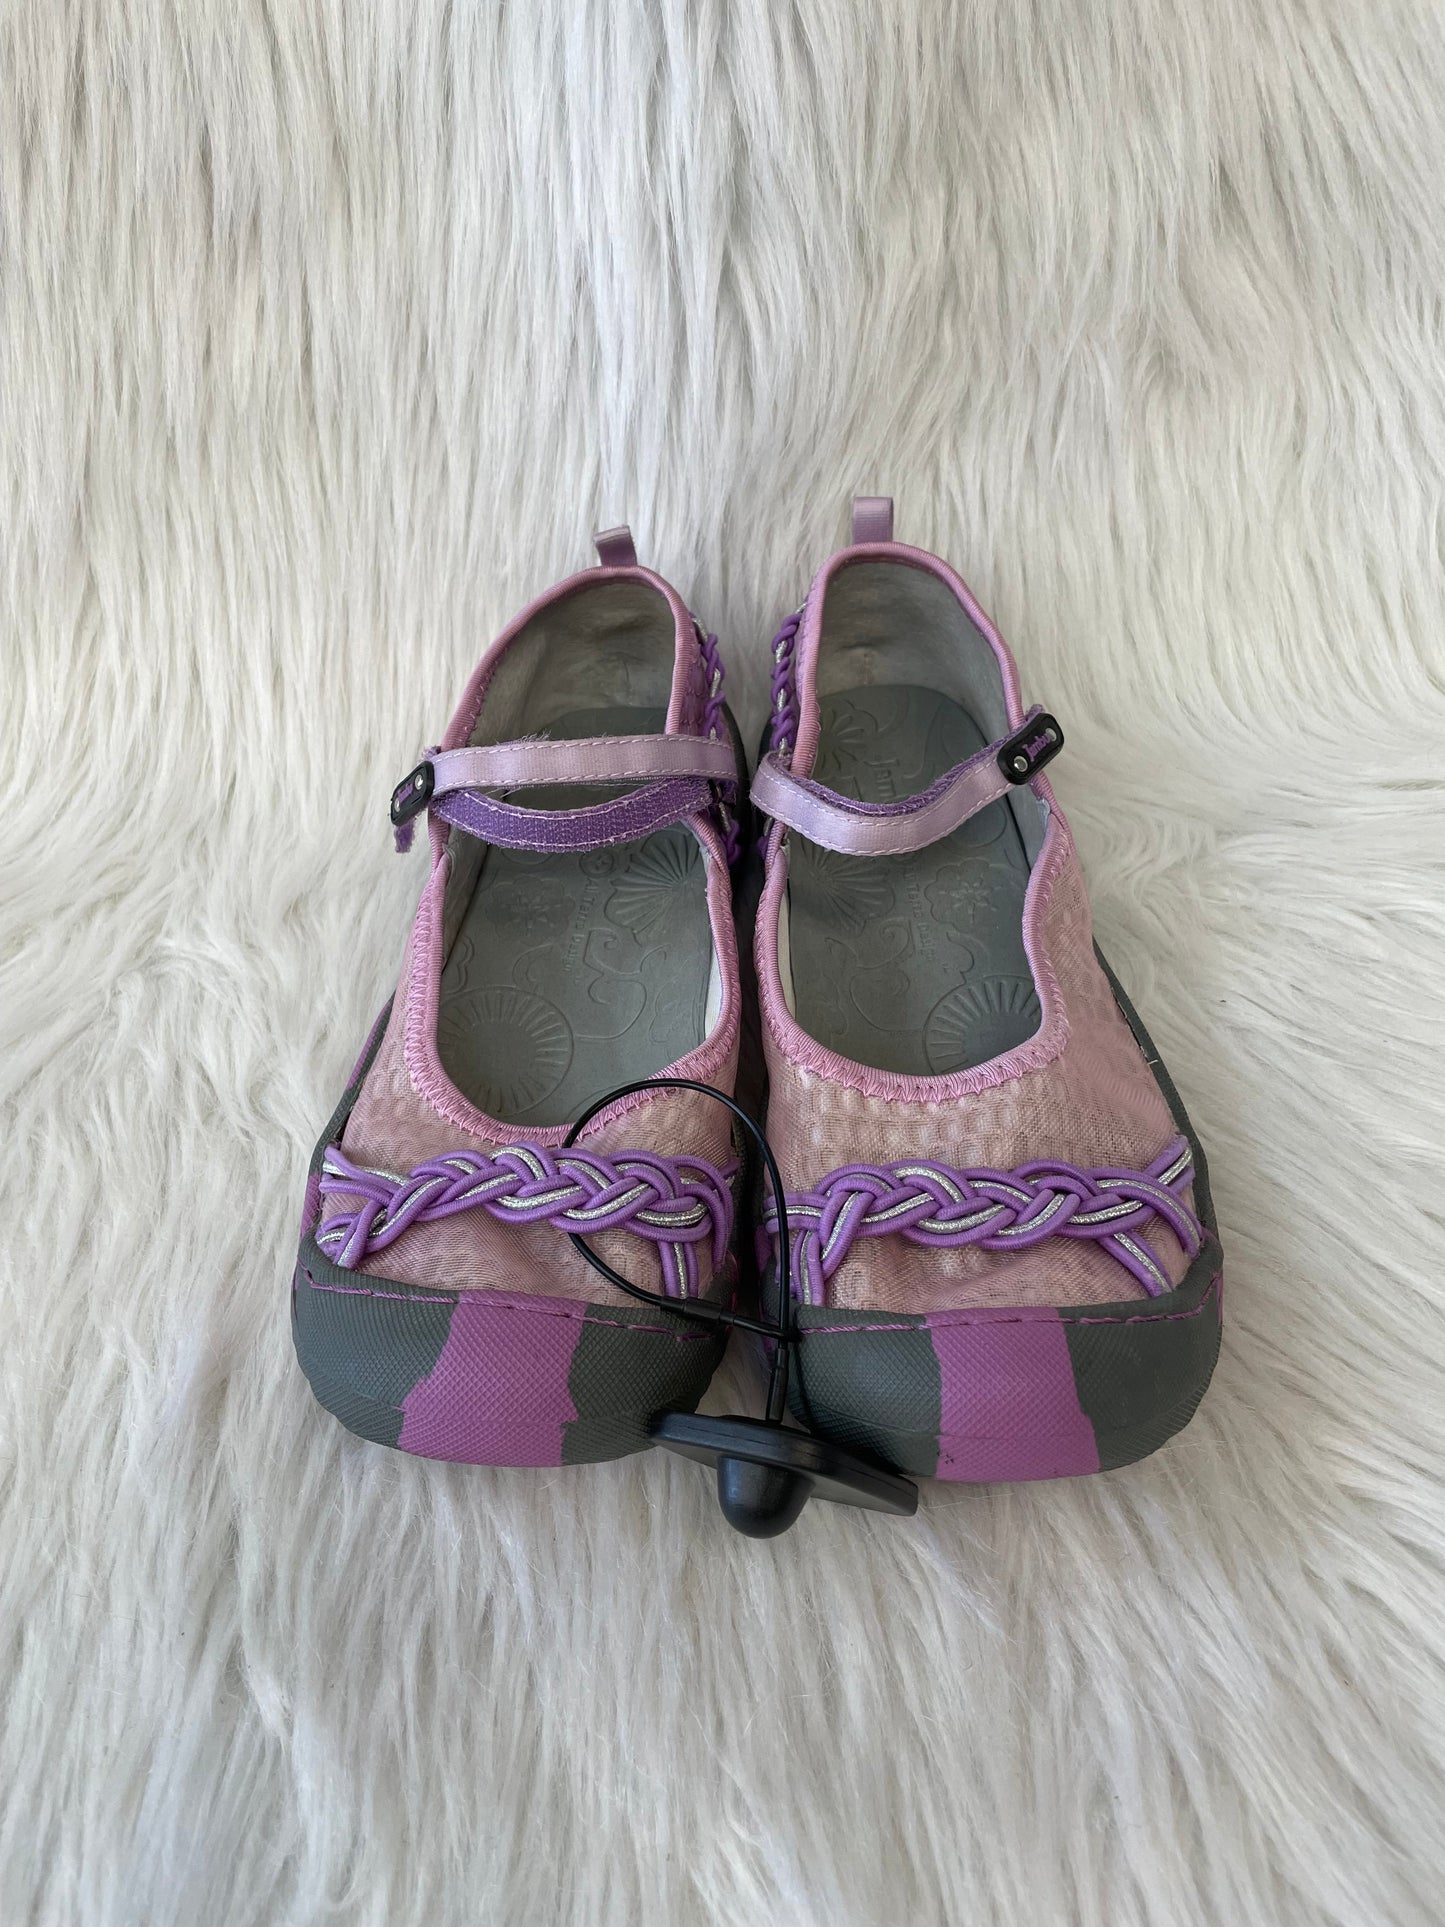 Grey & Pink Shoes Flats Jambu, Size 6